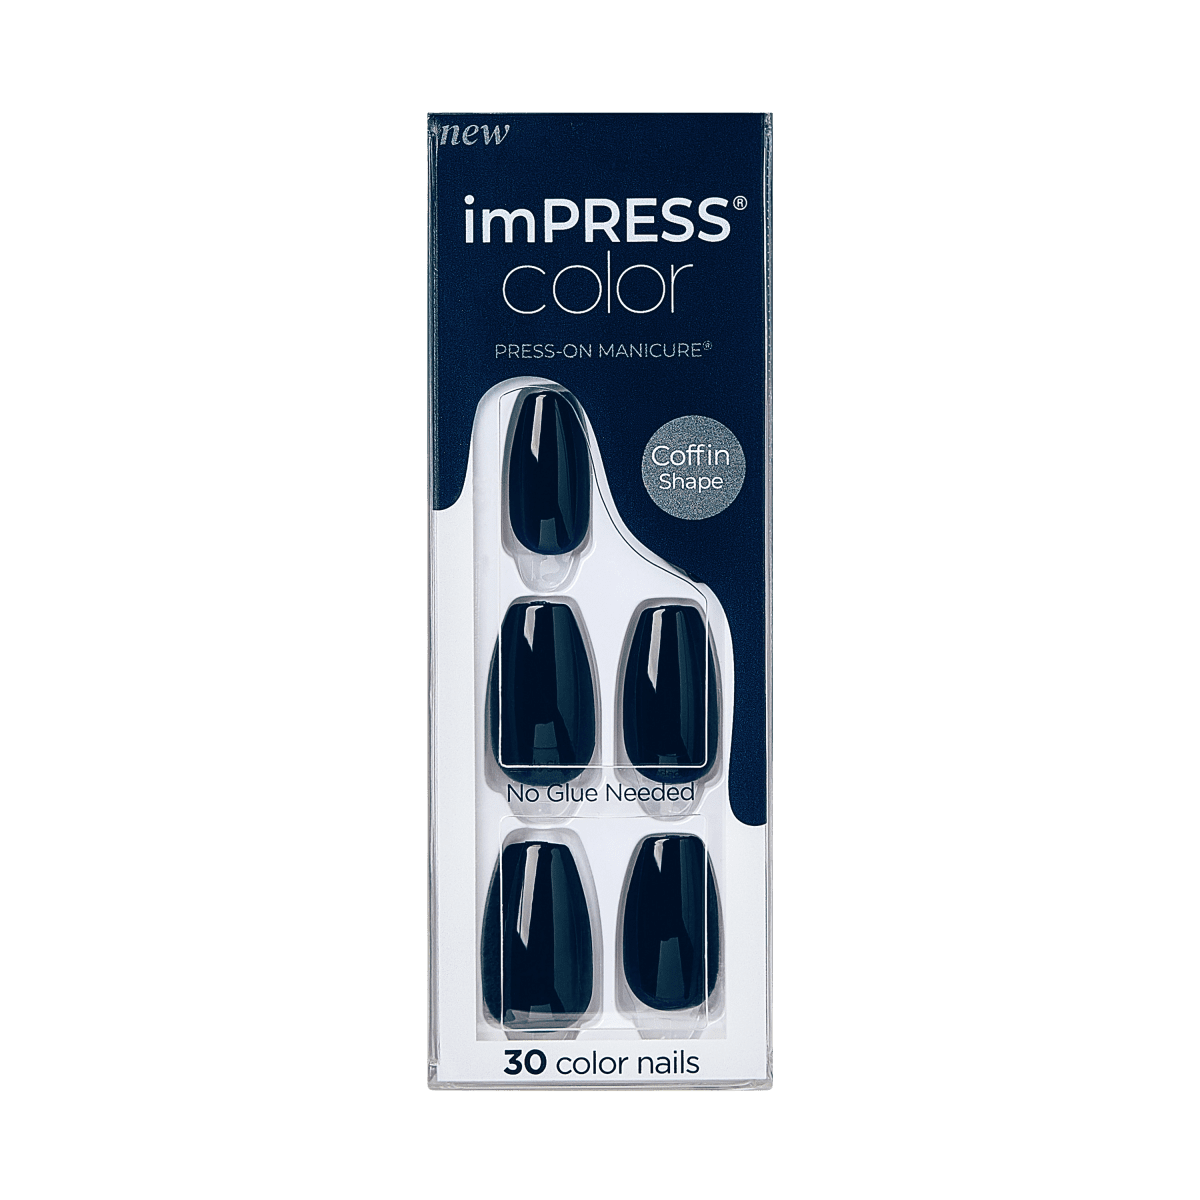 imPRESS Color Press-On Manicure - Static